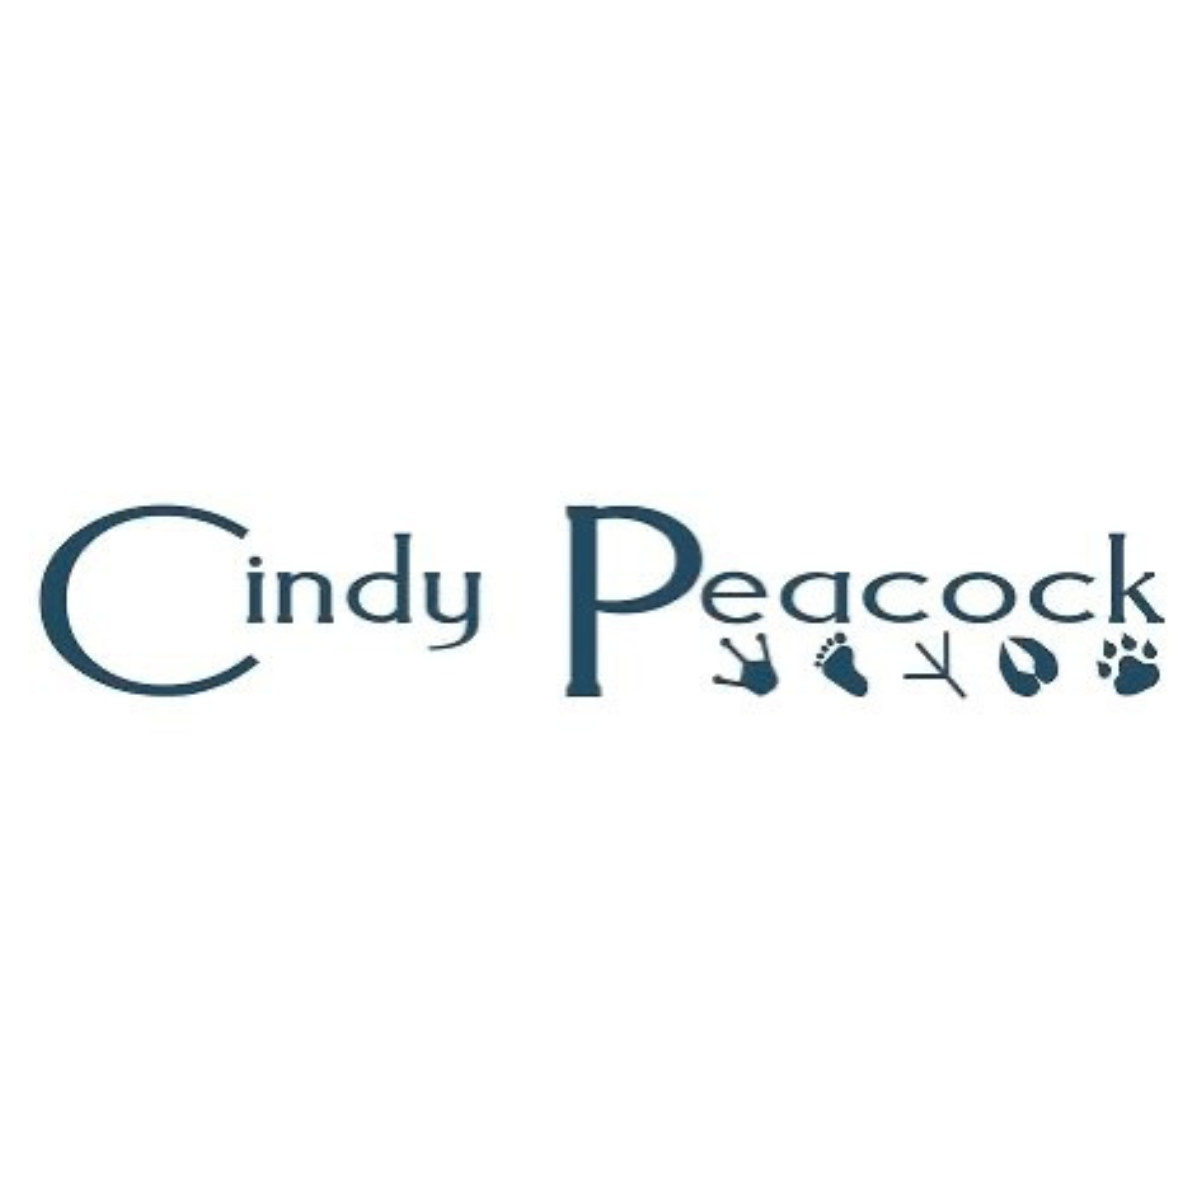 CINDY PEACOCK - ANIMAL TRAINER